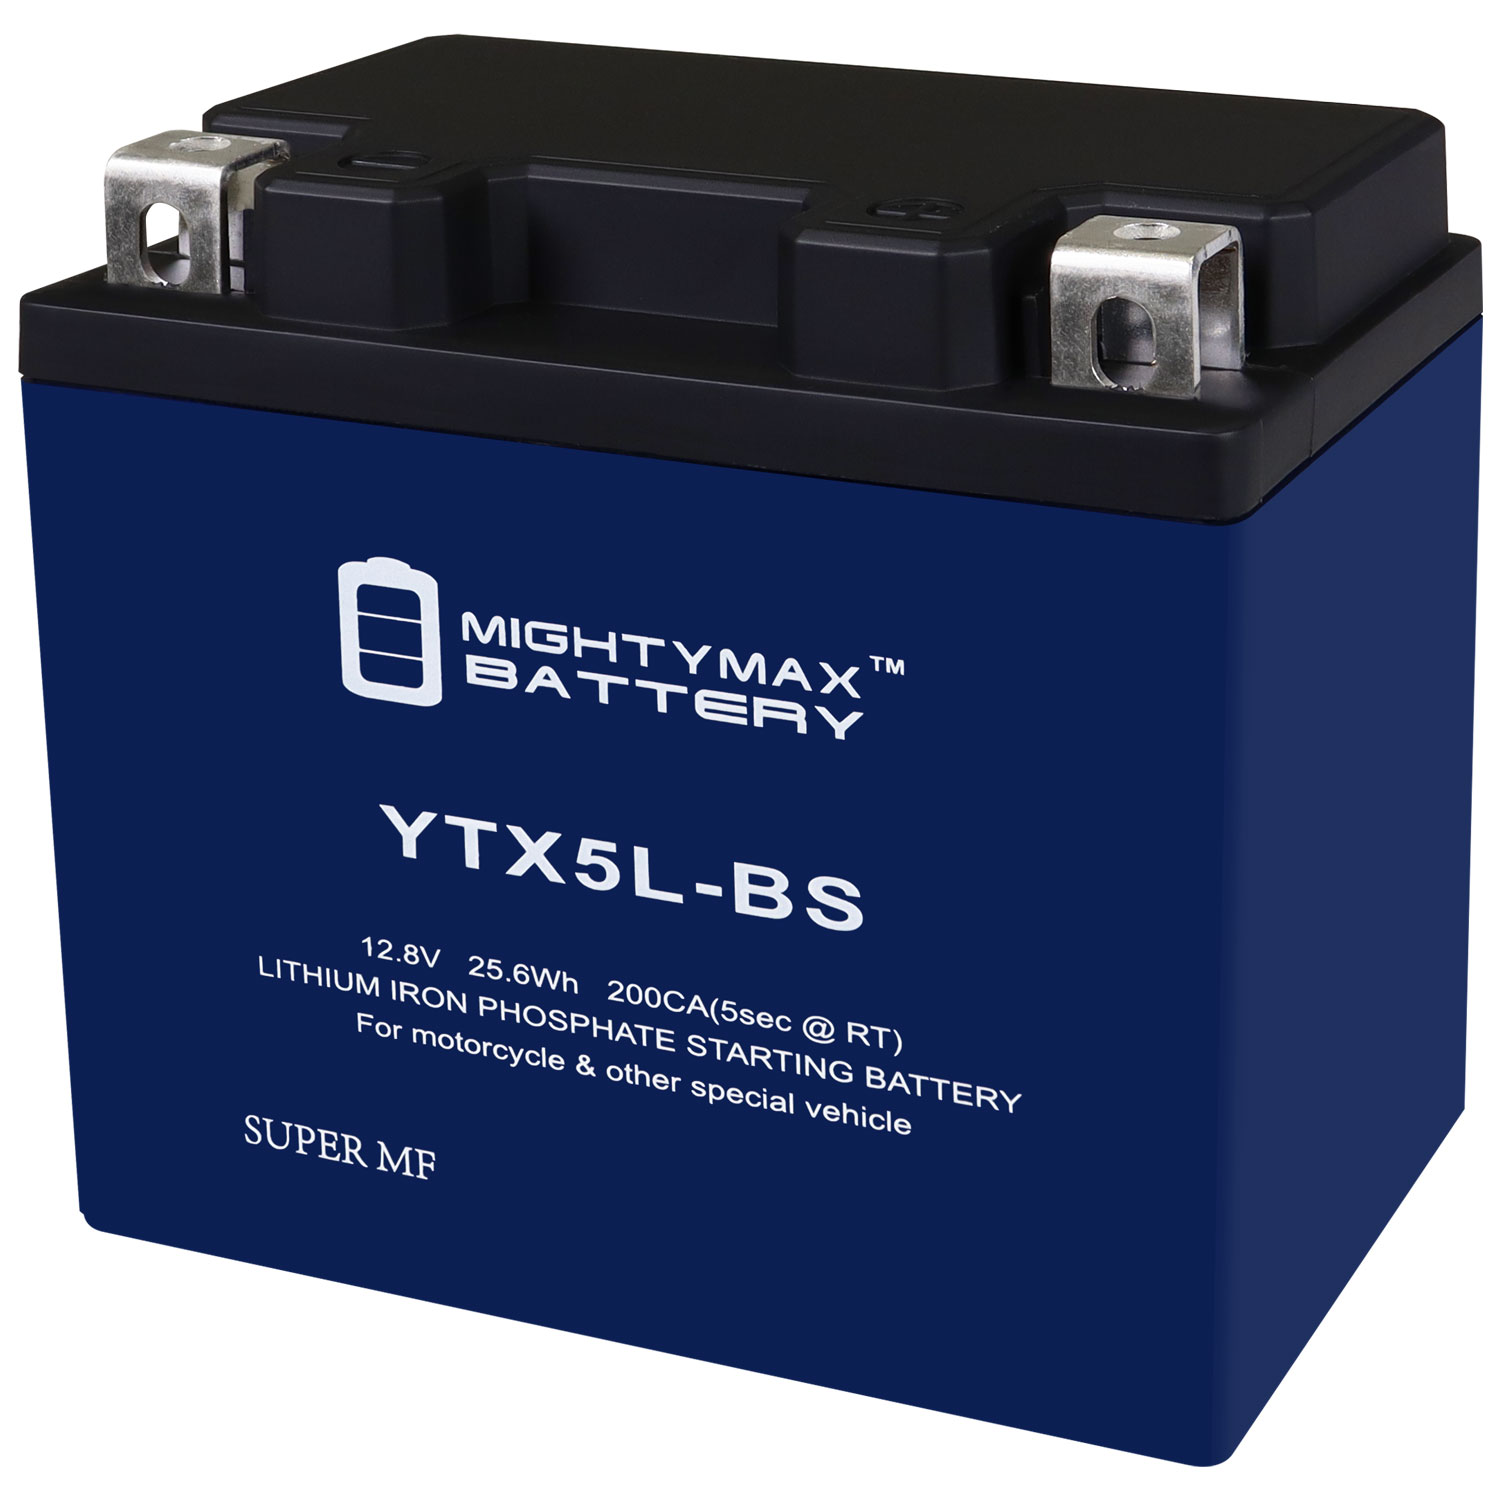 Mighty Max Battery YTX5L-BSLIFEPO4 - 12 Volt 4 AH, 150 CCA, Lithium Iron Phosphate (LiFePO4) Battery - YTX5L-BSLIFEPO4